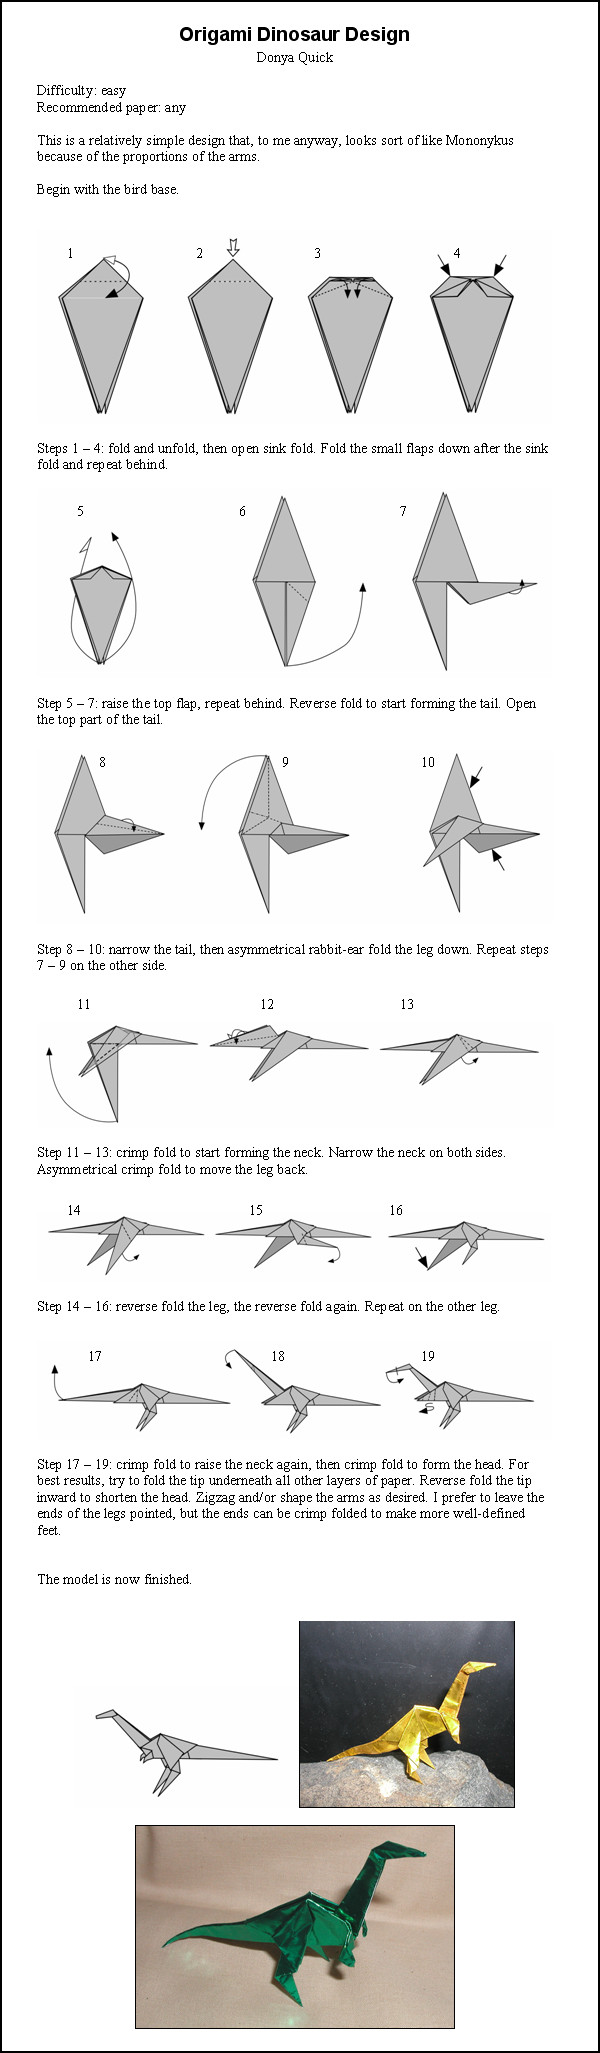 origami dinosaurs instructions